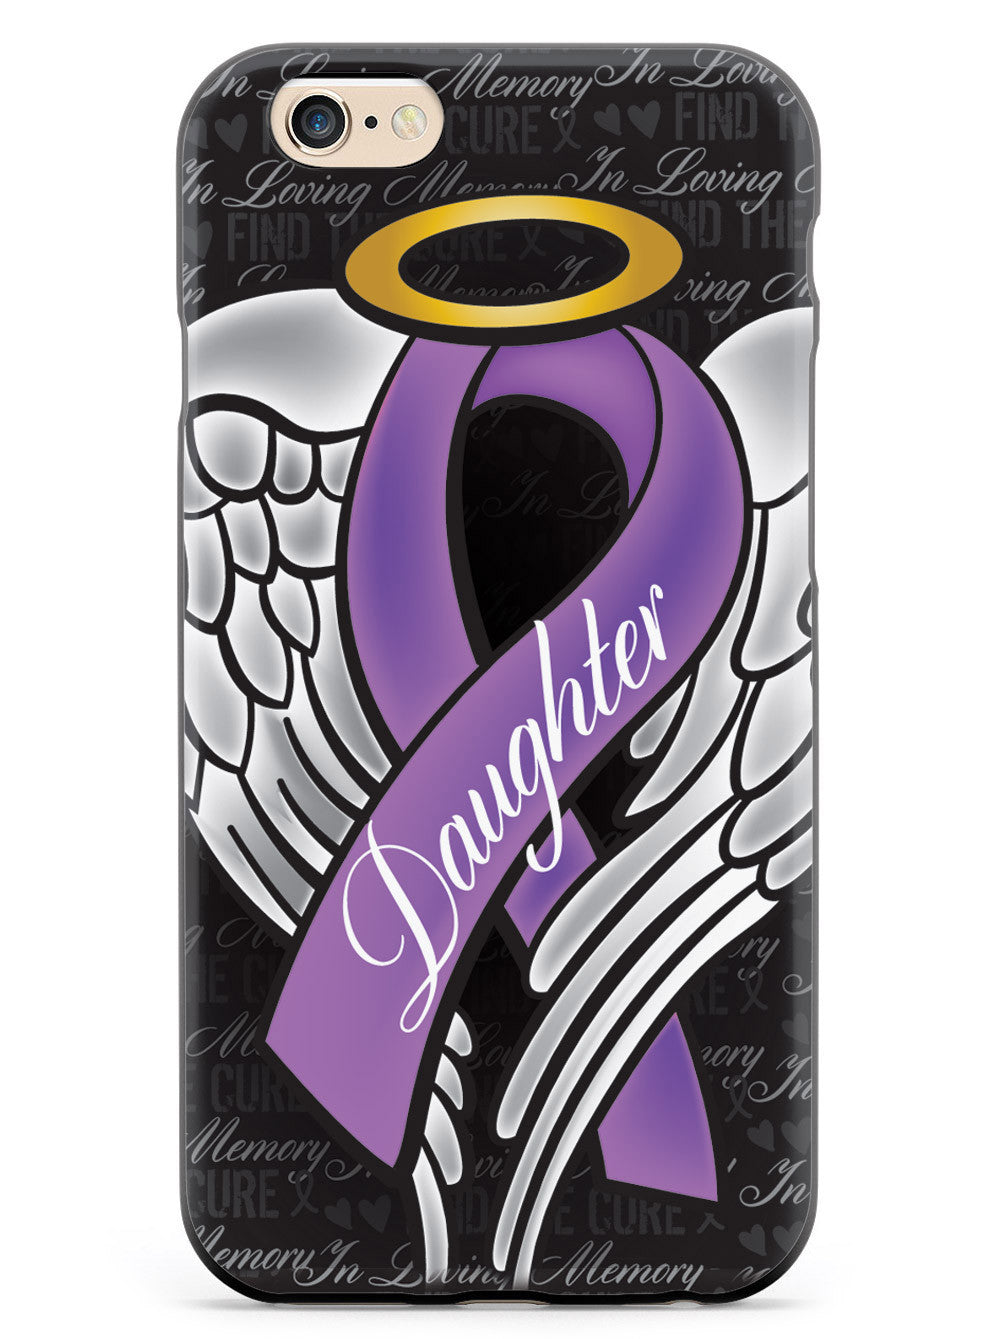 In Loving Memory of My Daughter - Purple Ribbon Case